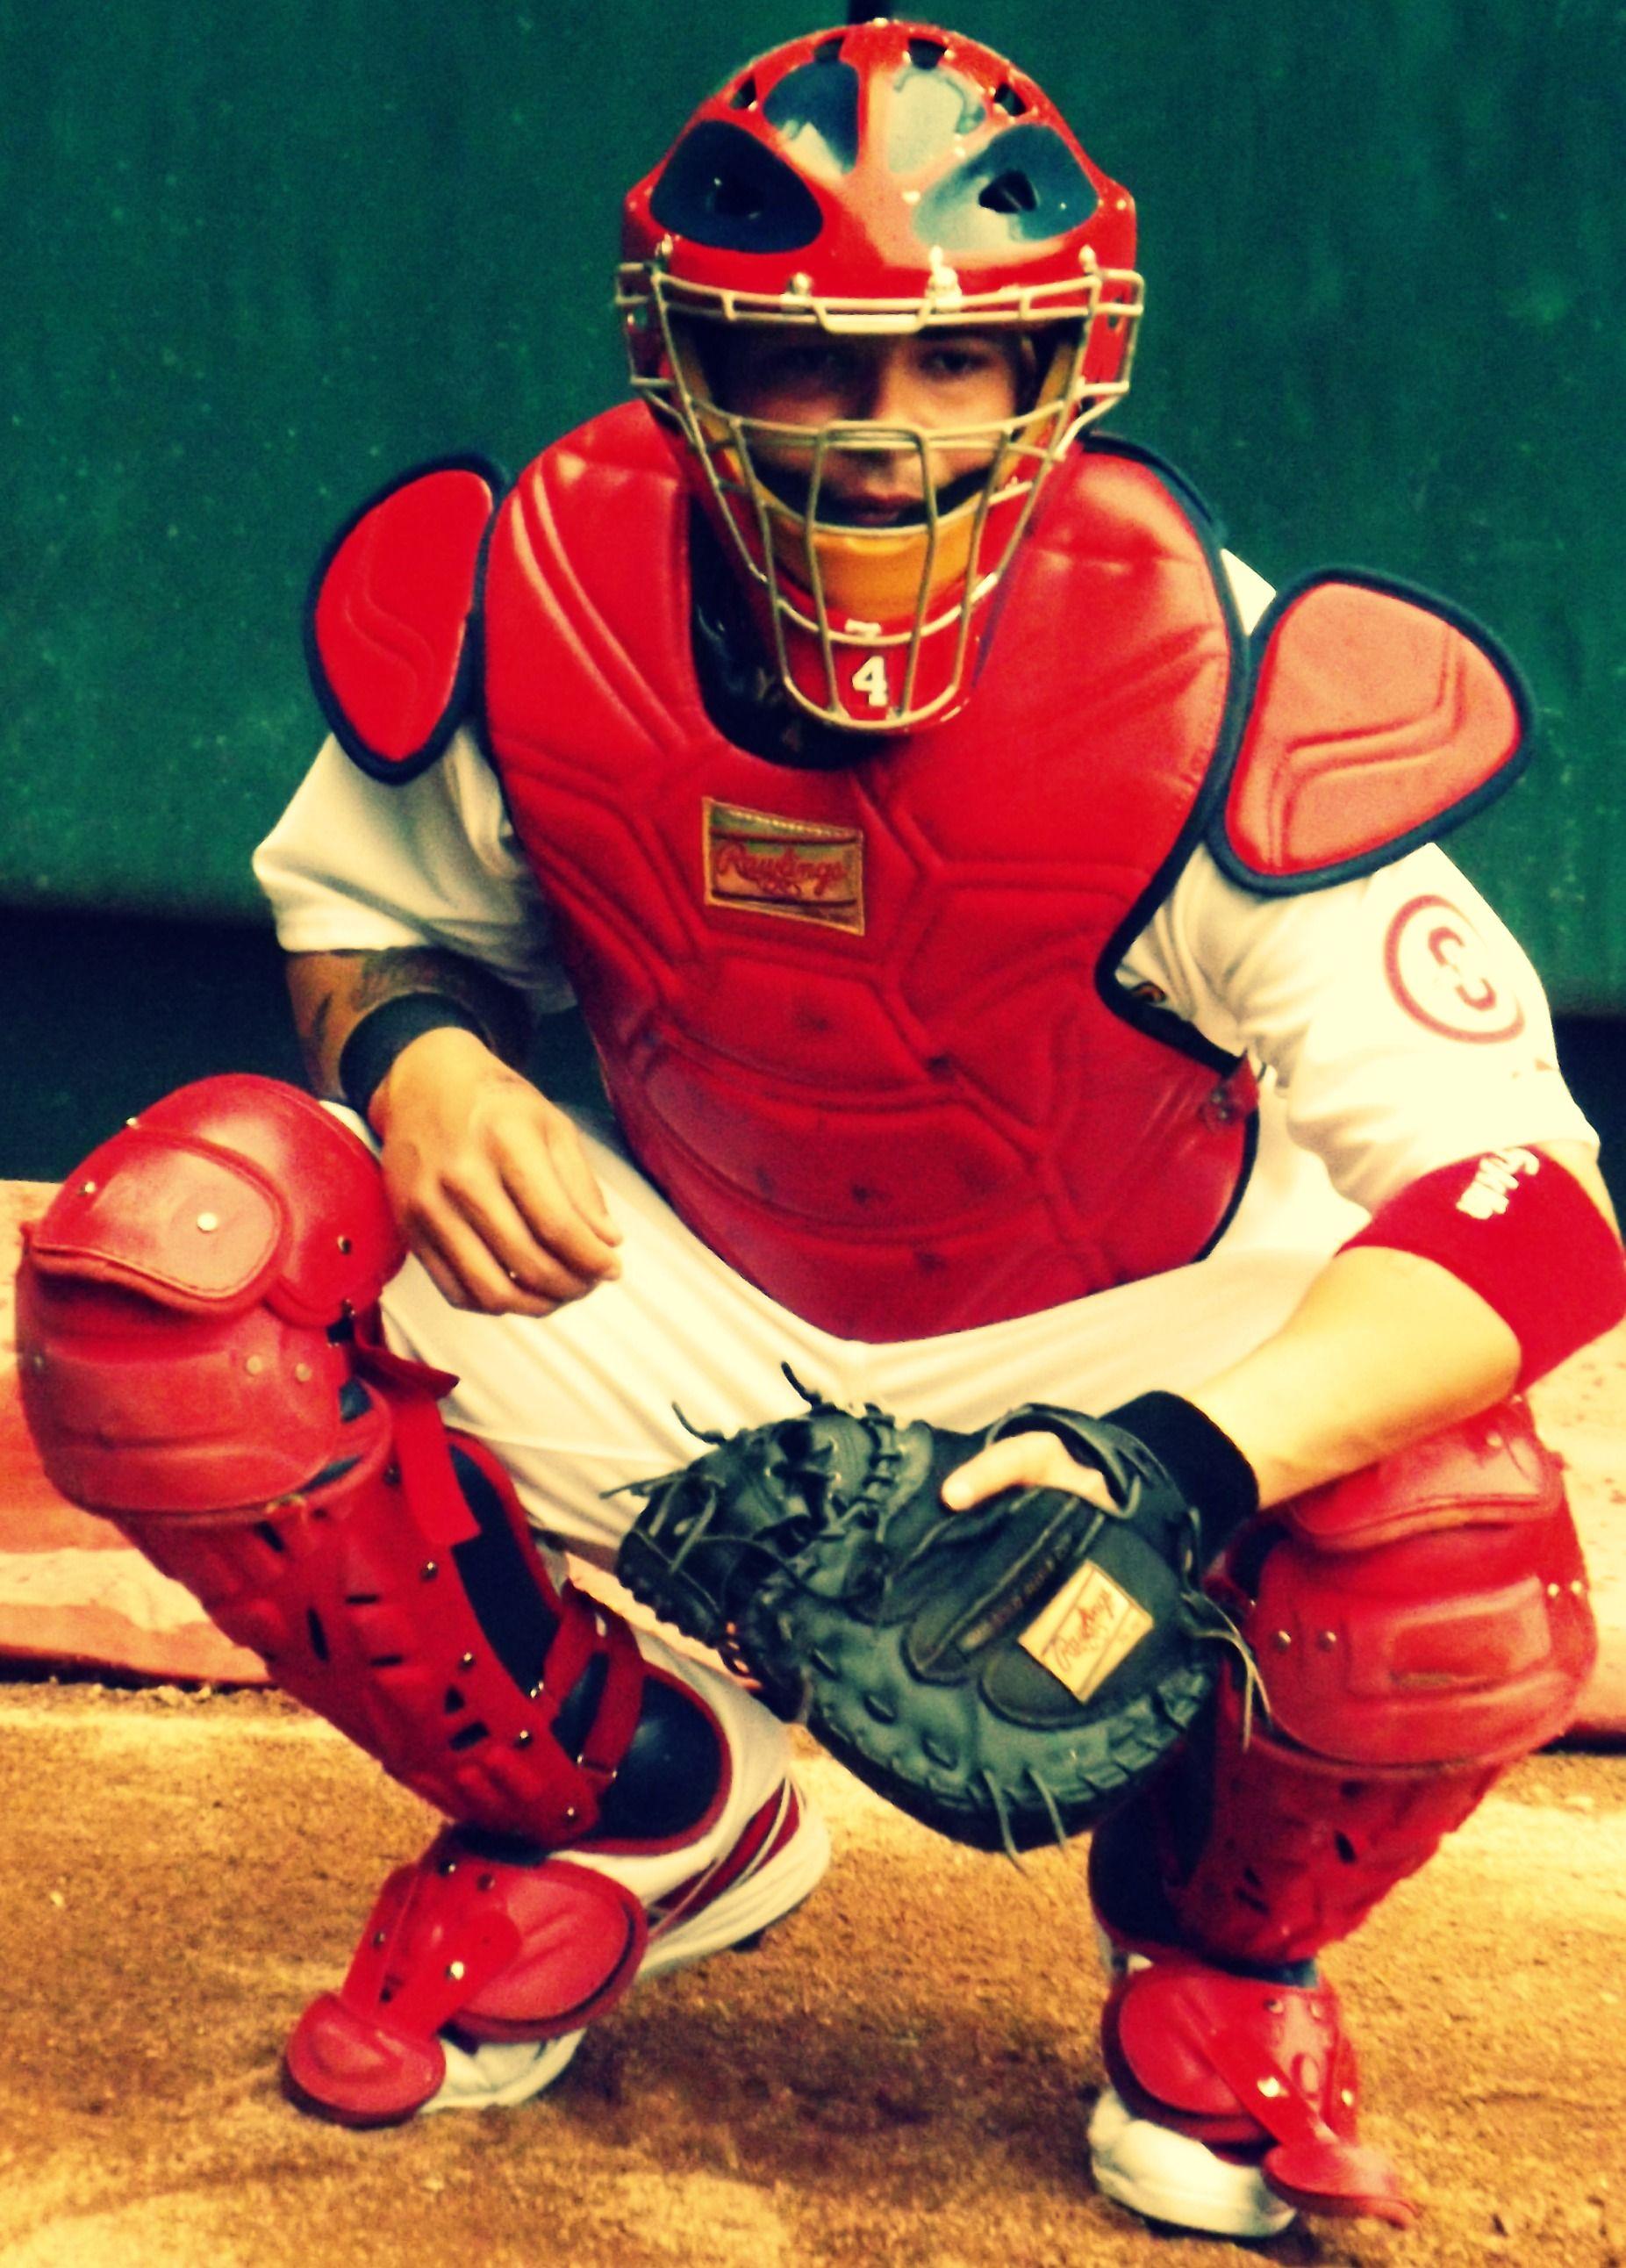 Yadier Molina. St. Louis Cardinals baseball. MY FAVORITE PLAYER